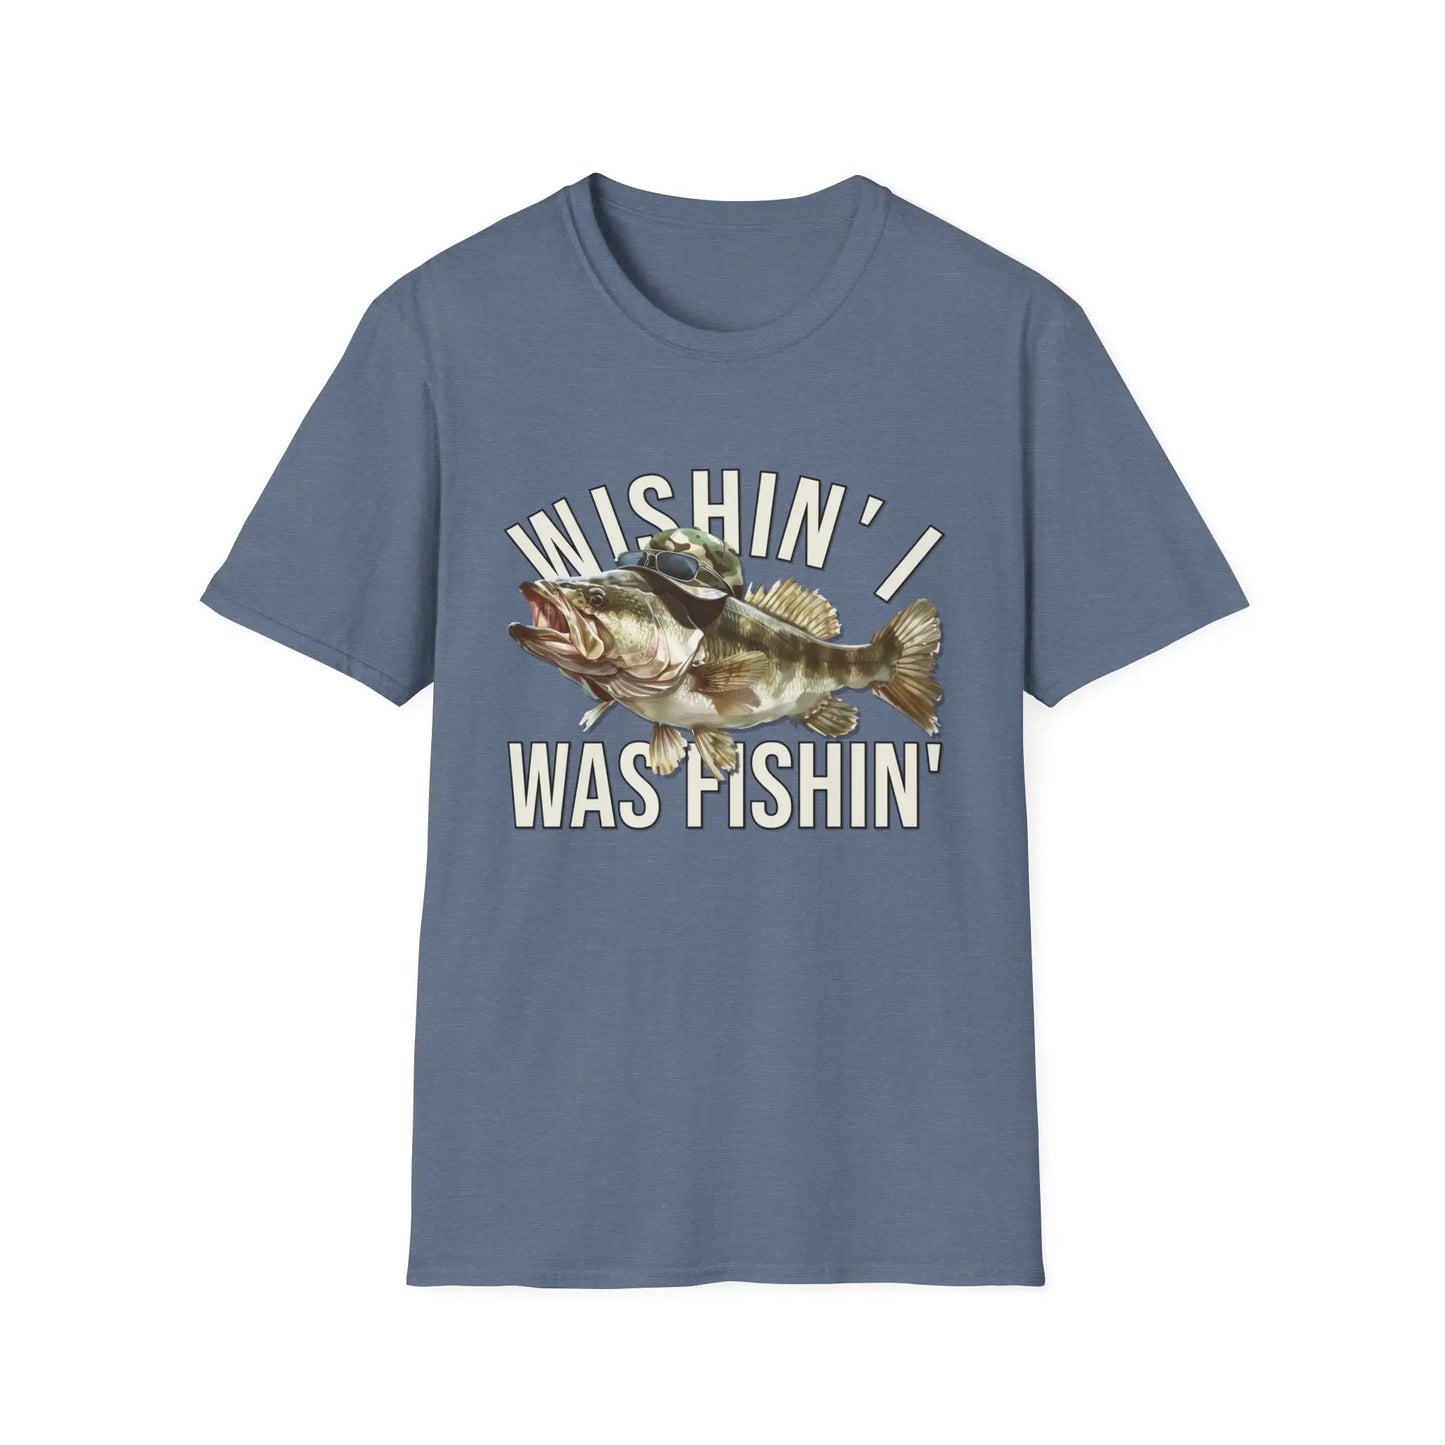 Wishin' I Was Fishin' Women's T-Shirt - Wicked Tees